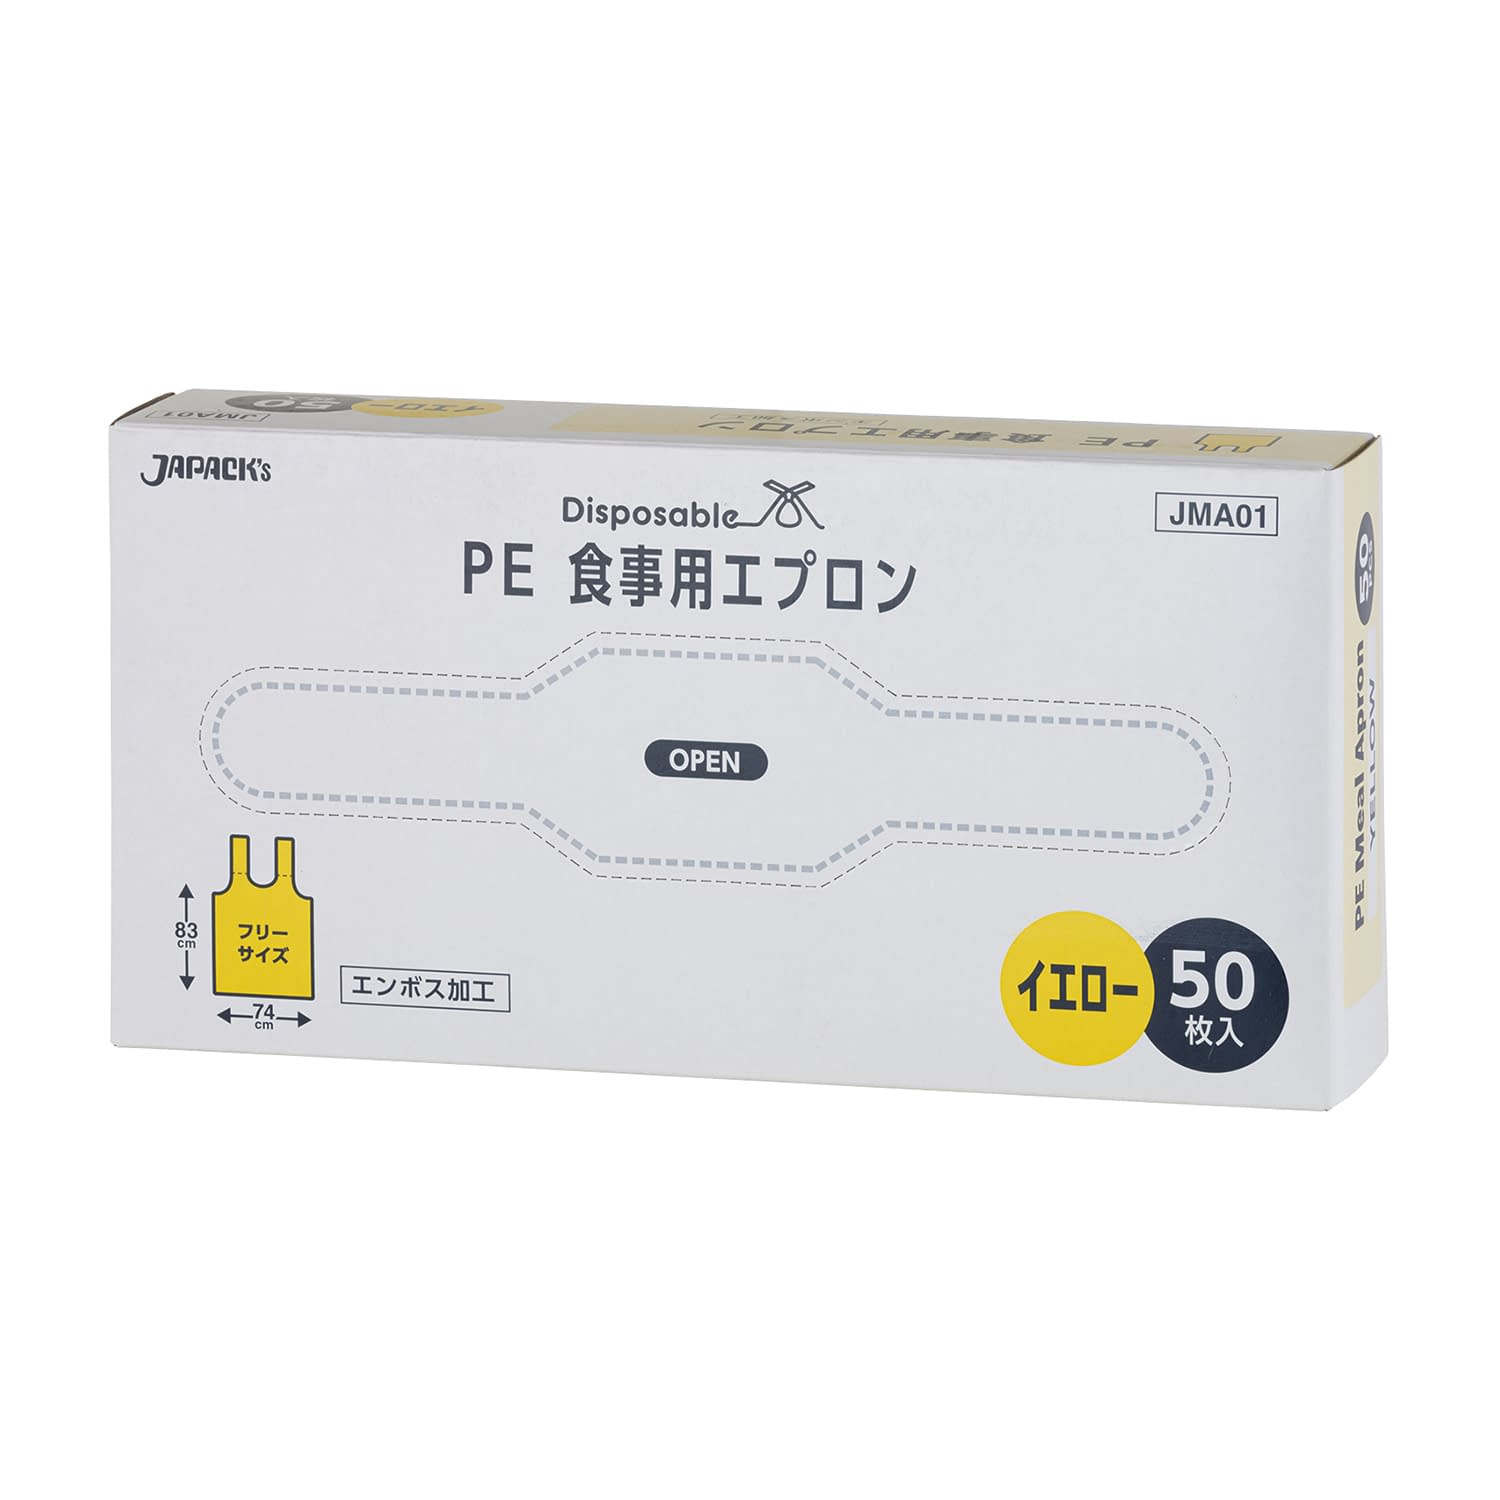 PE食事用エプロン JMA01 50マイ イエロー  ディスポ  25-2525-00【ジャパックス】(JMA01)(25-2525-00)